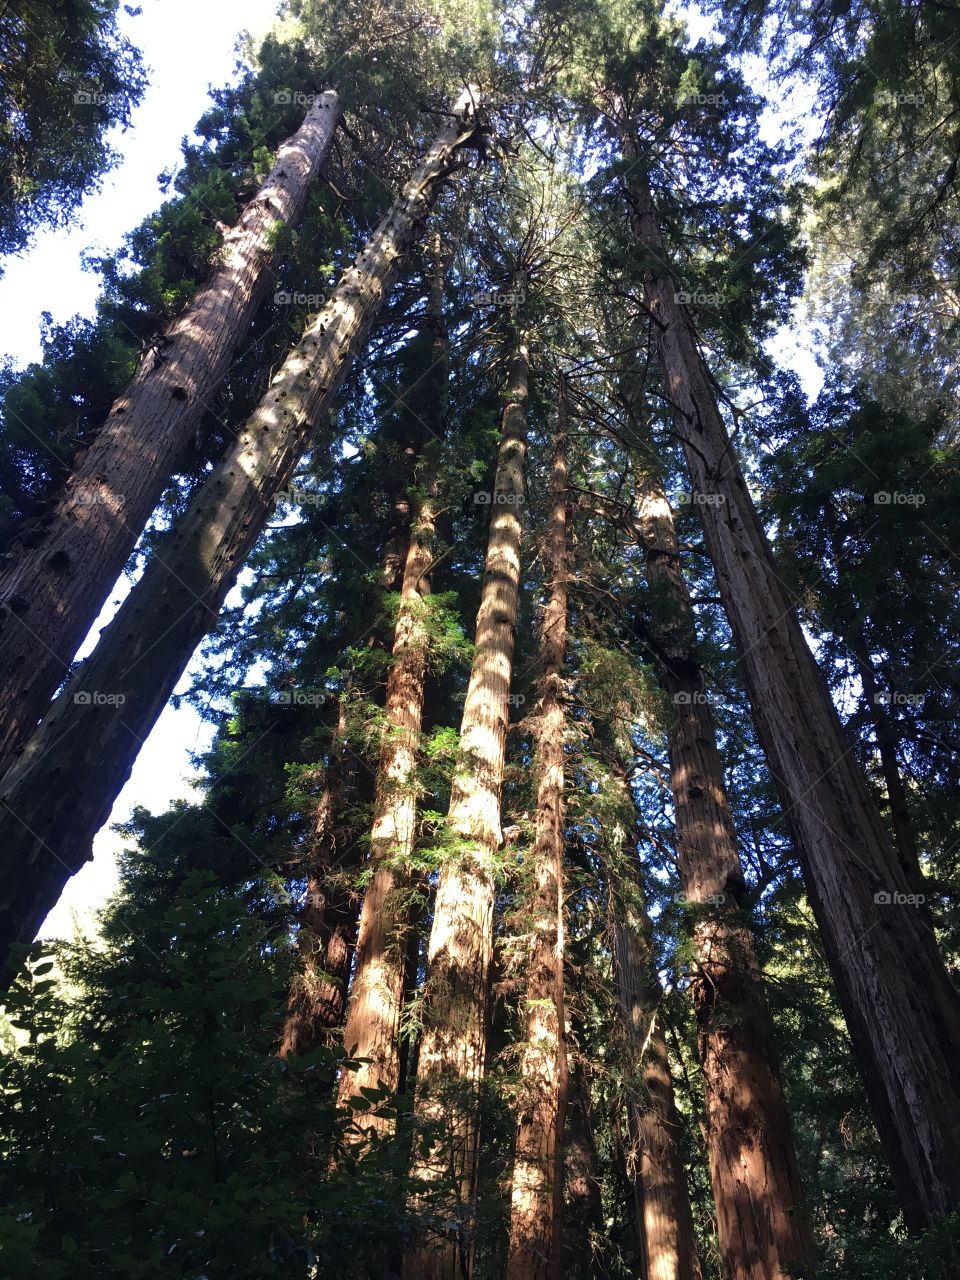 California redwoods - Muir Woods